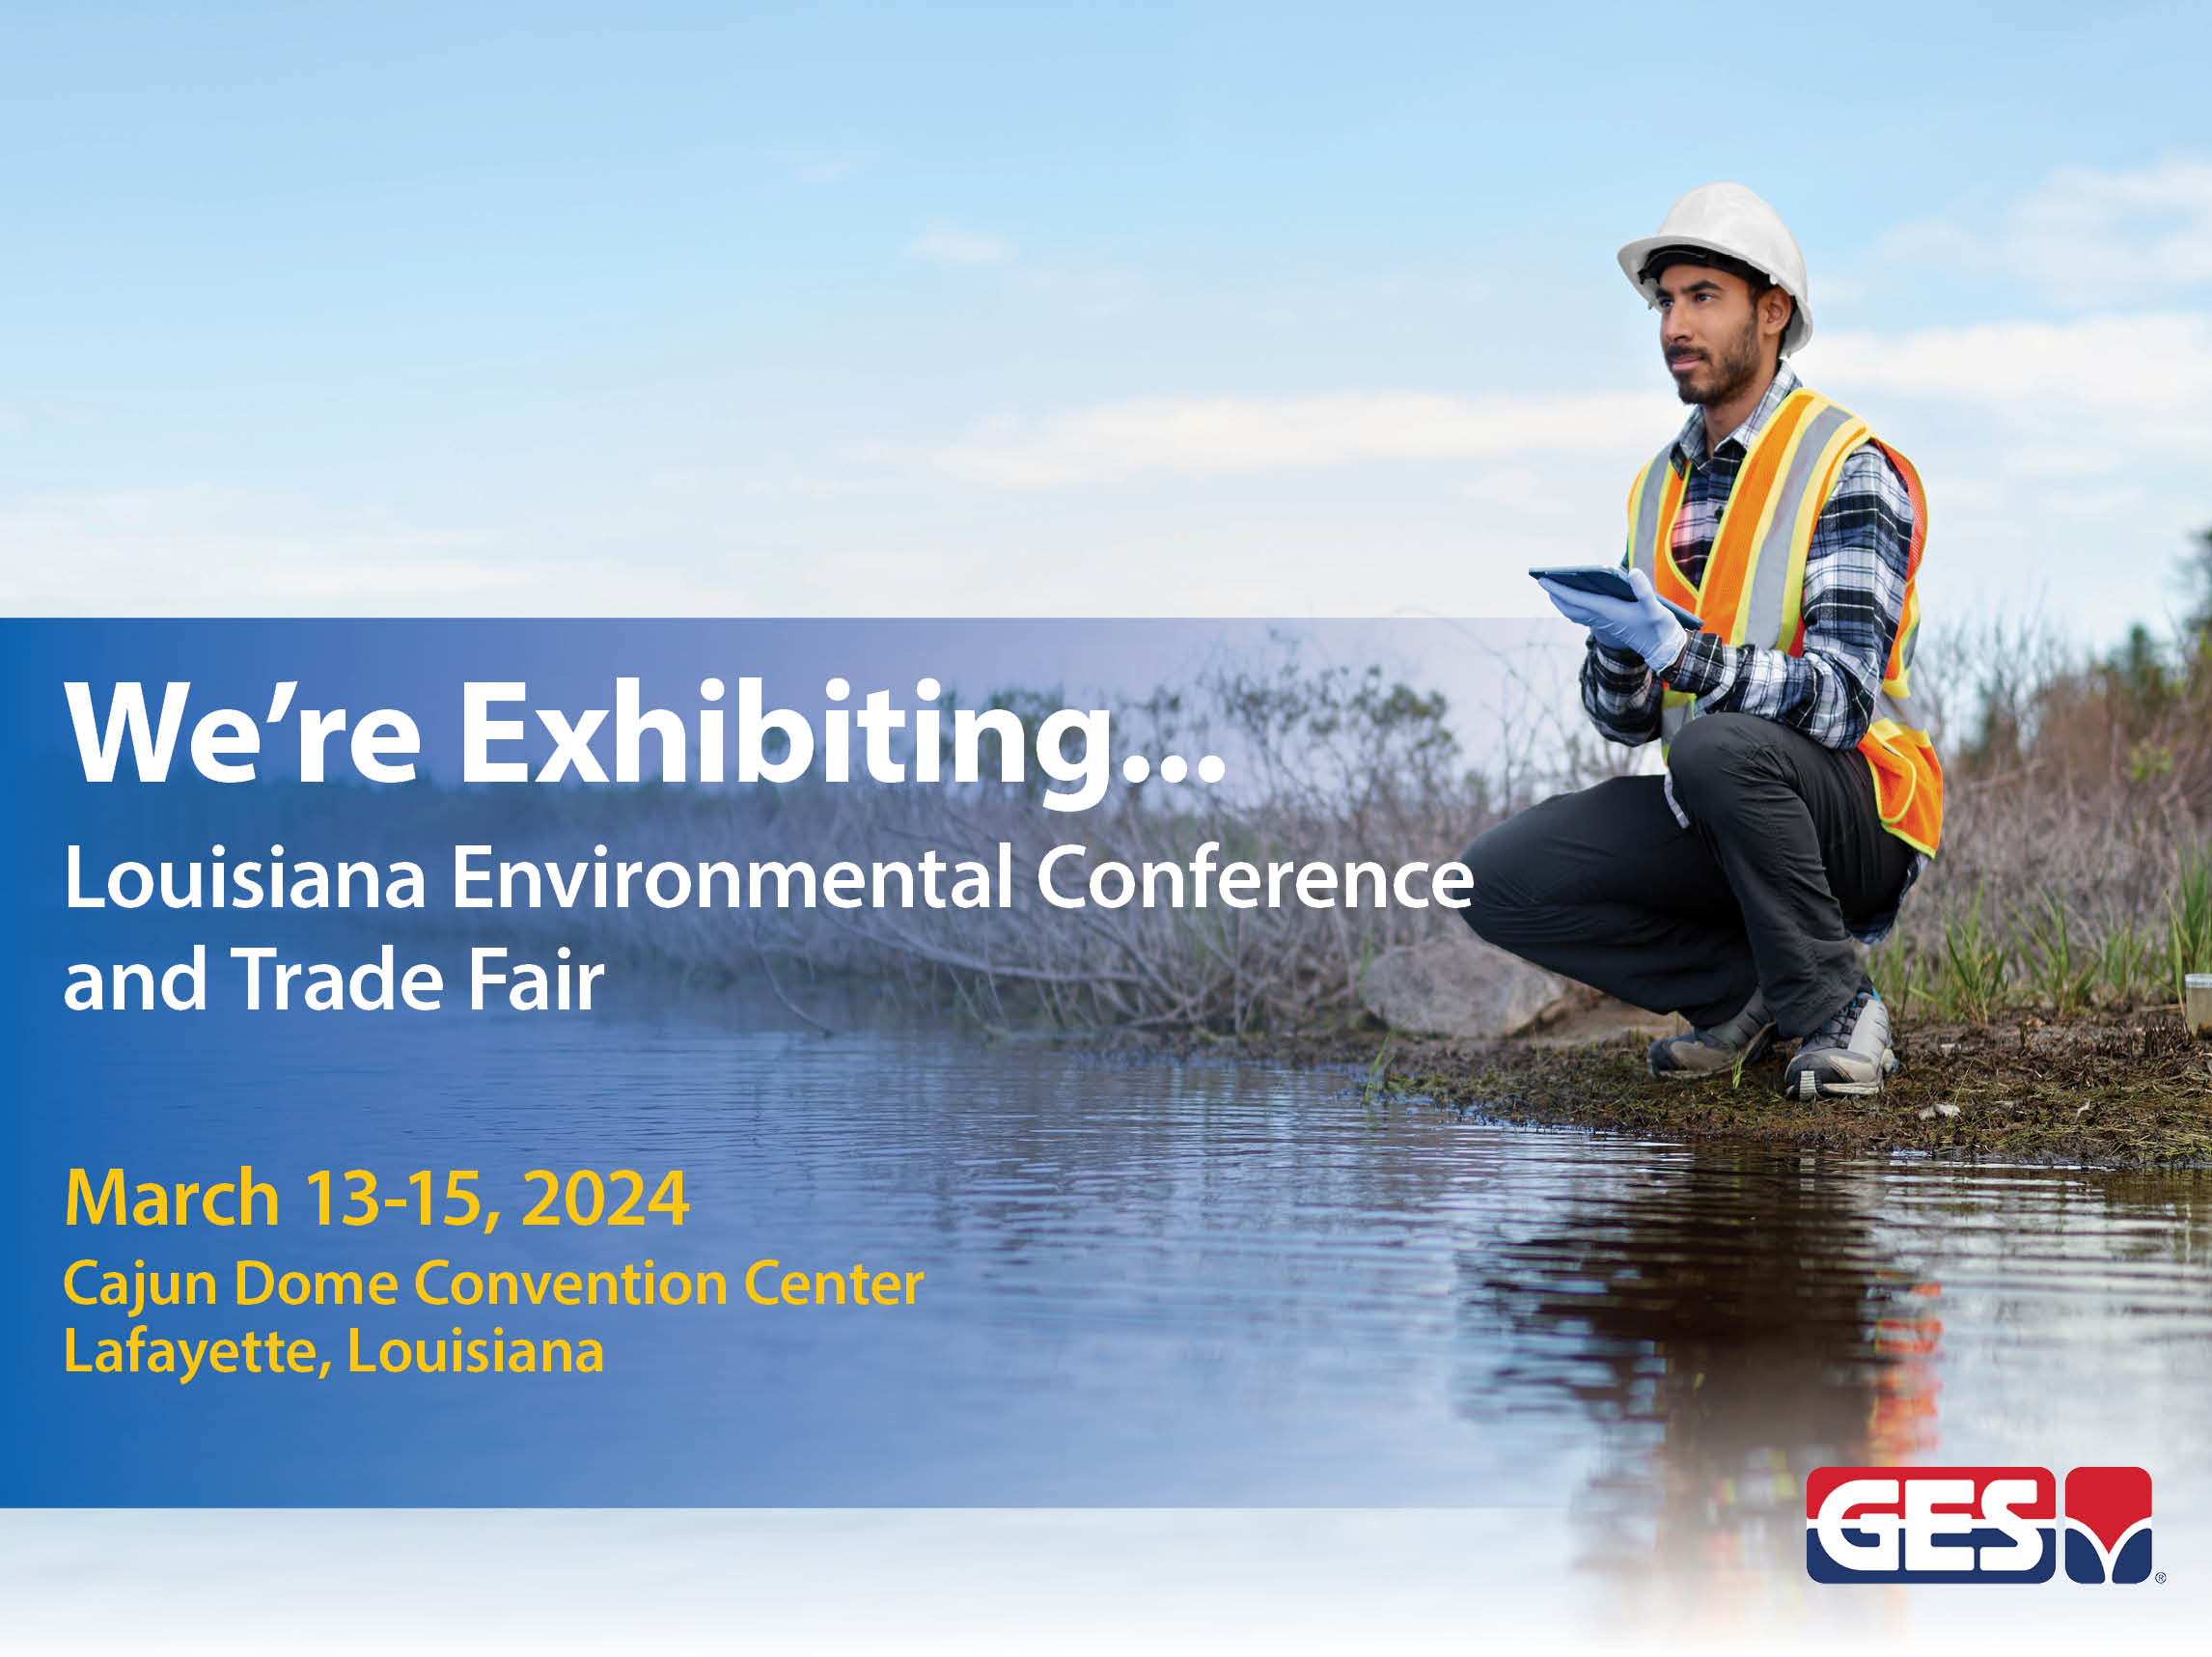 Louisiana Environmental Conference and Trade Fair 